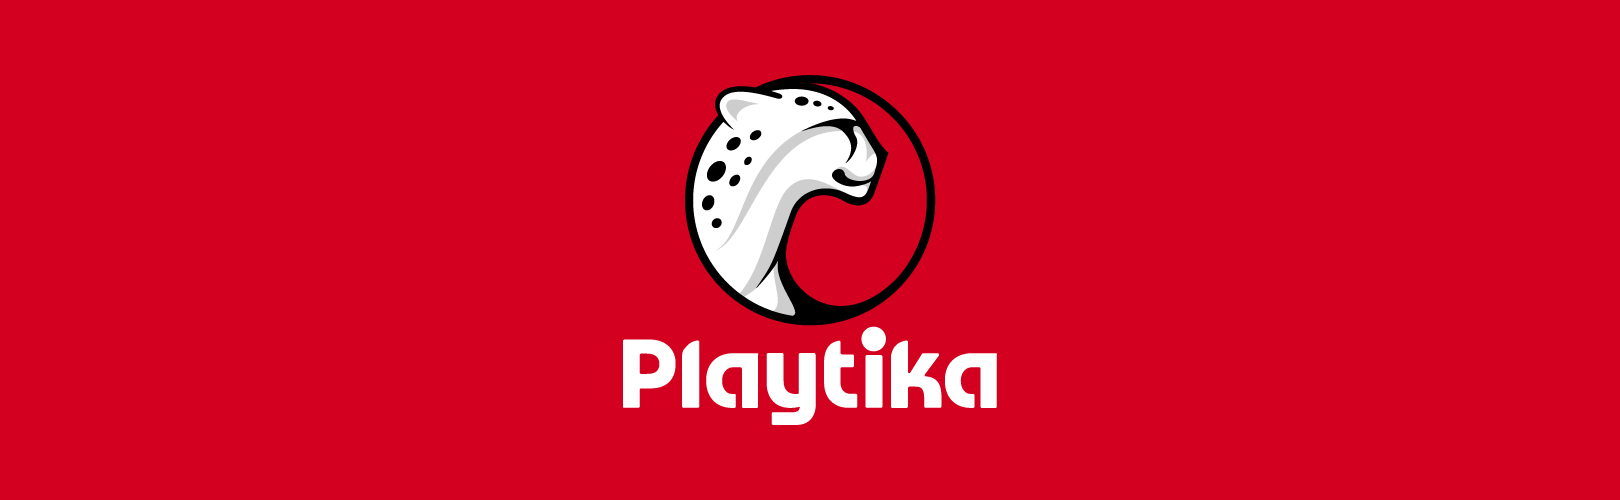 Playtika 株式会社の採用 求人 転職サイトgreen グリーン